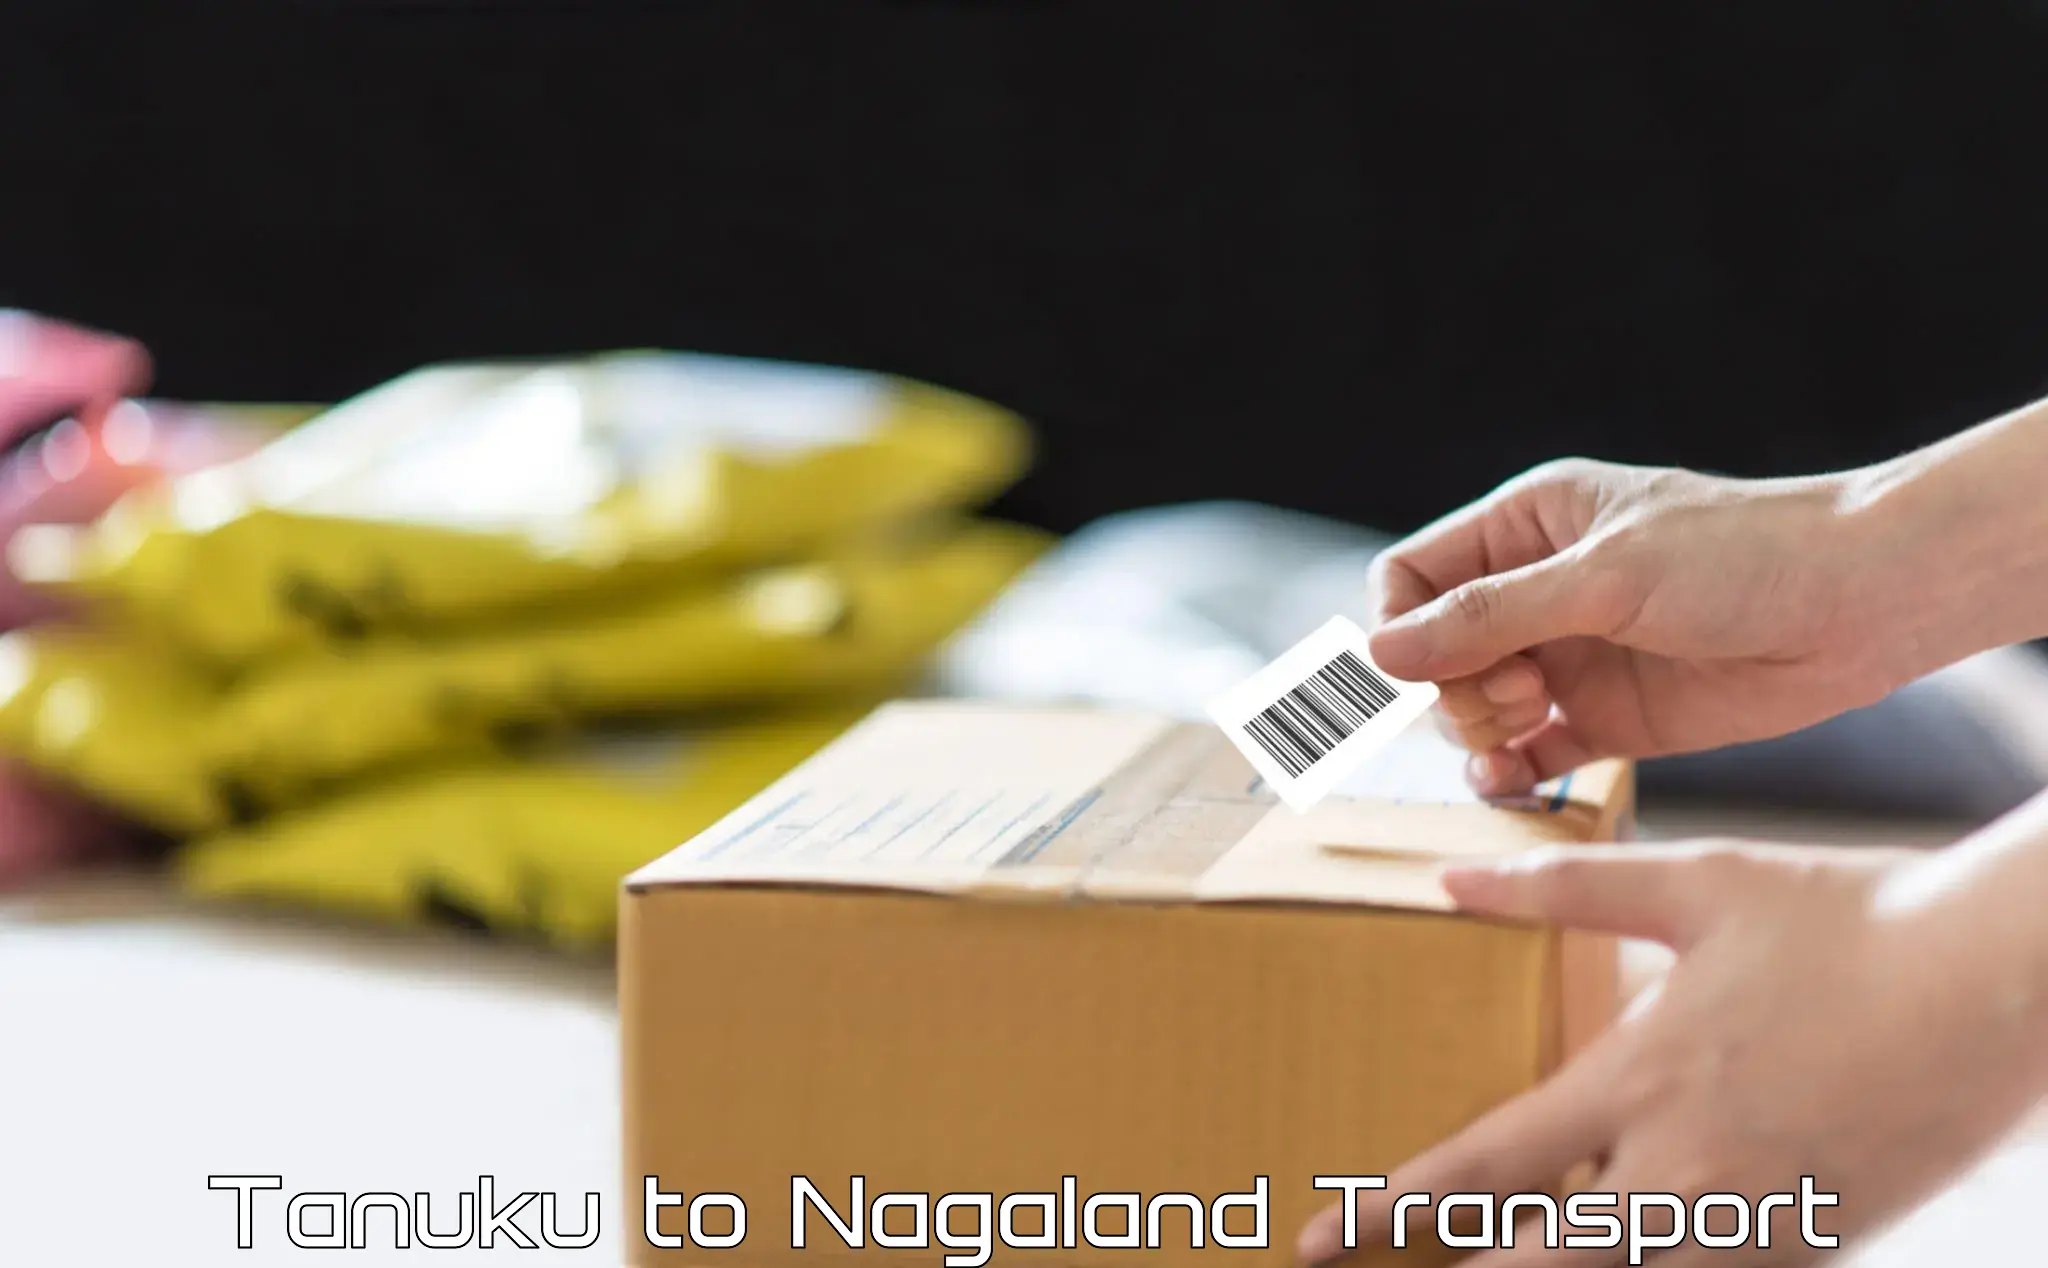 Nearby transport service Tanuku to Nagaland